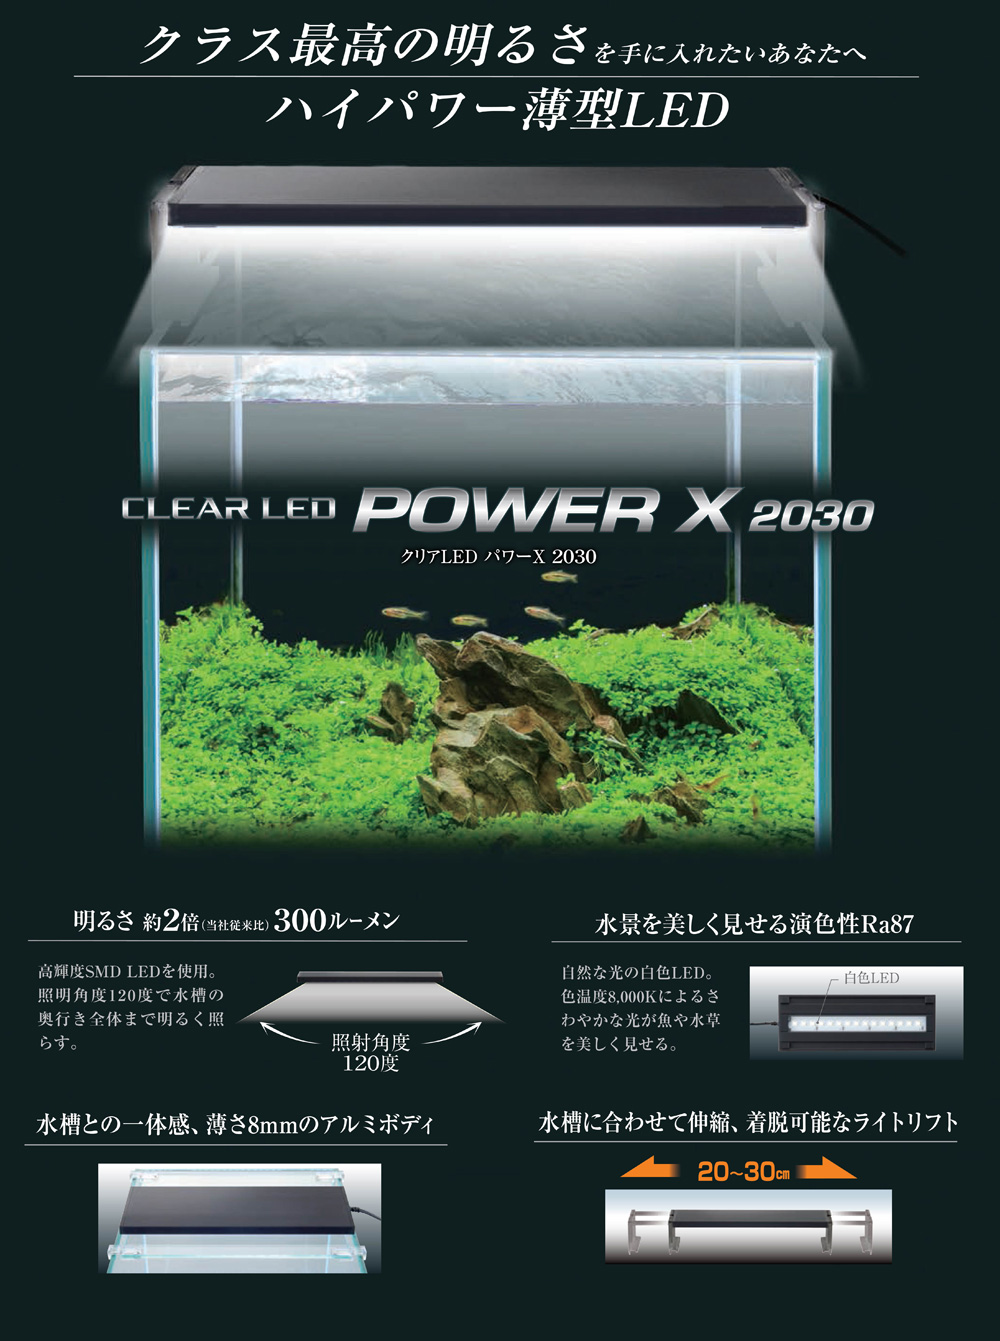 GEX クリアLED POWER X 2030 説明1